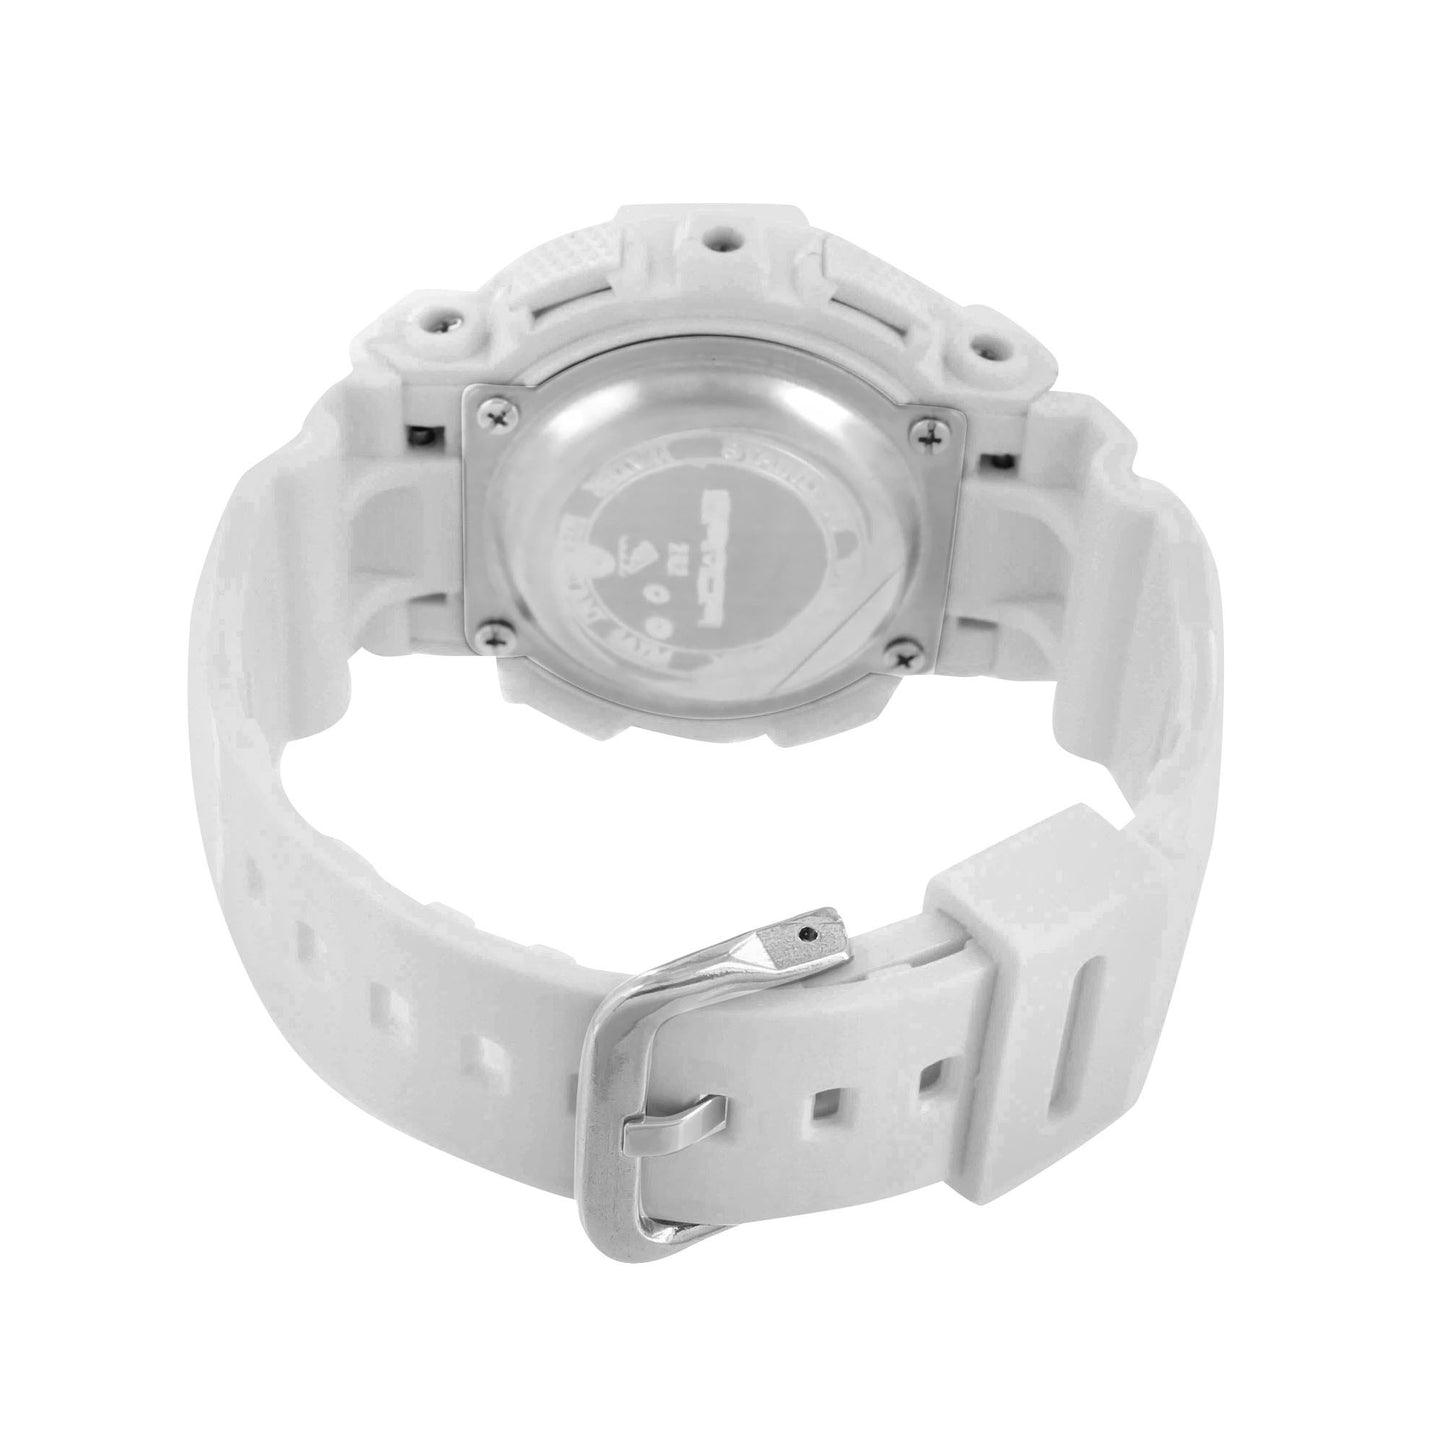 Wrist Watch White Special Edition Analog Digital Mens